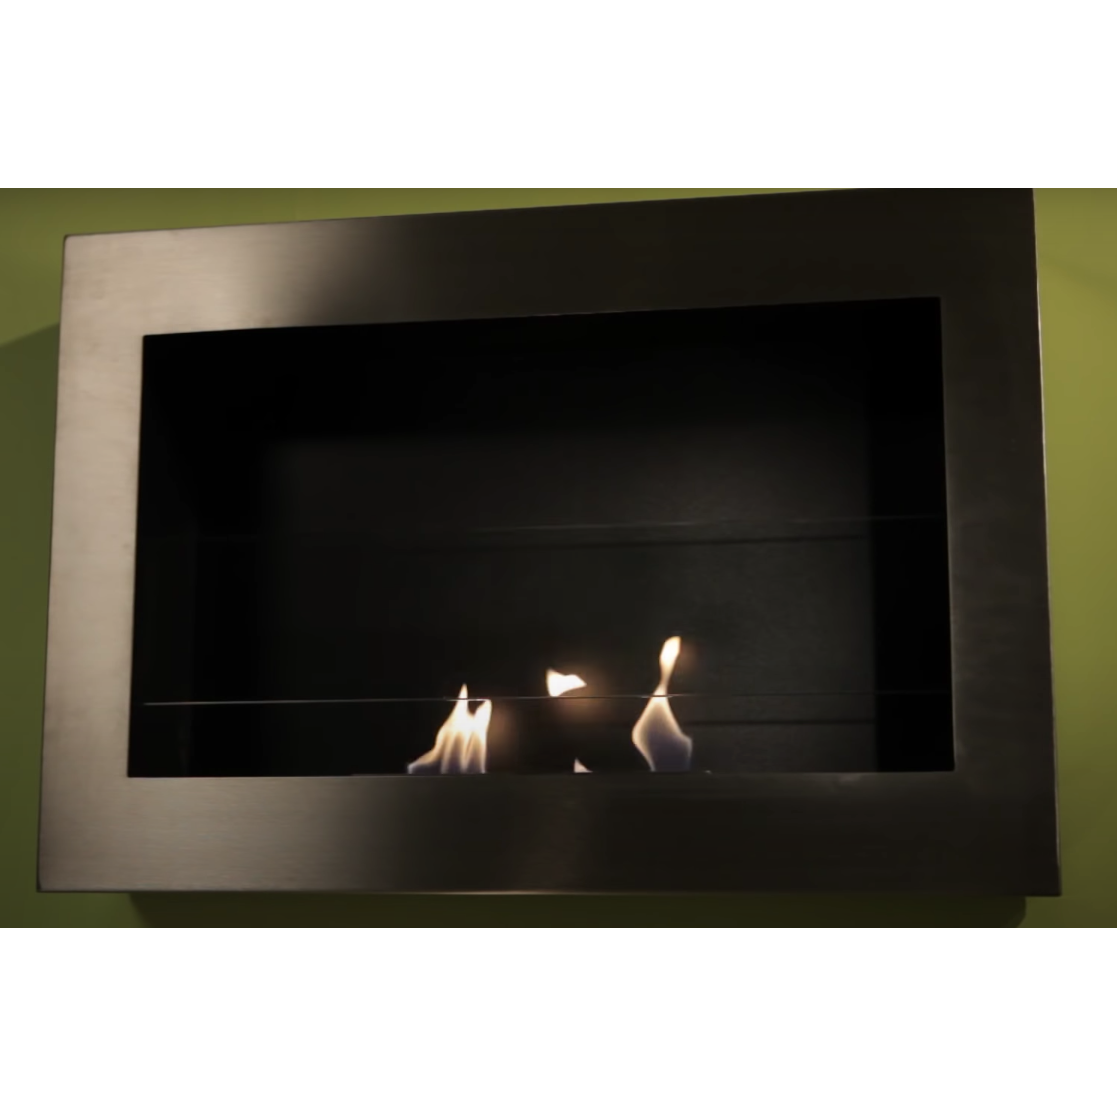 TerraFlame 30-in x 30-in Bio-ethanol Fireplace in the Gel